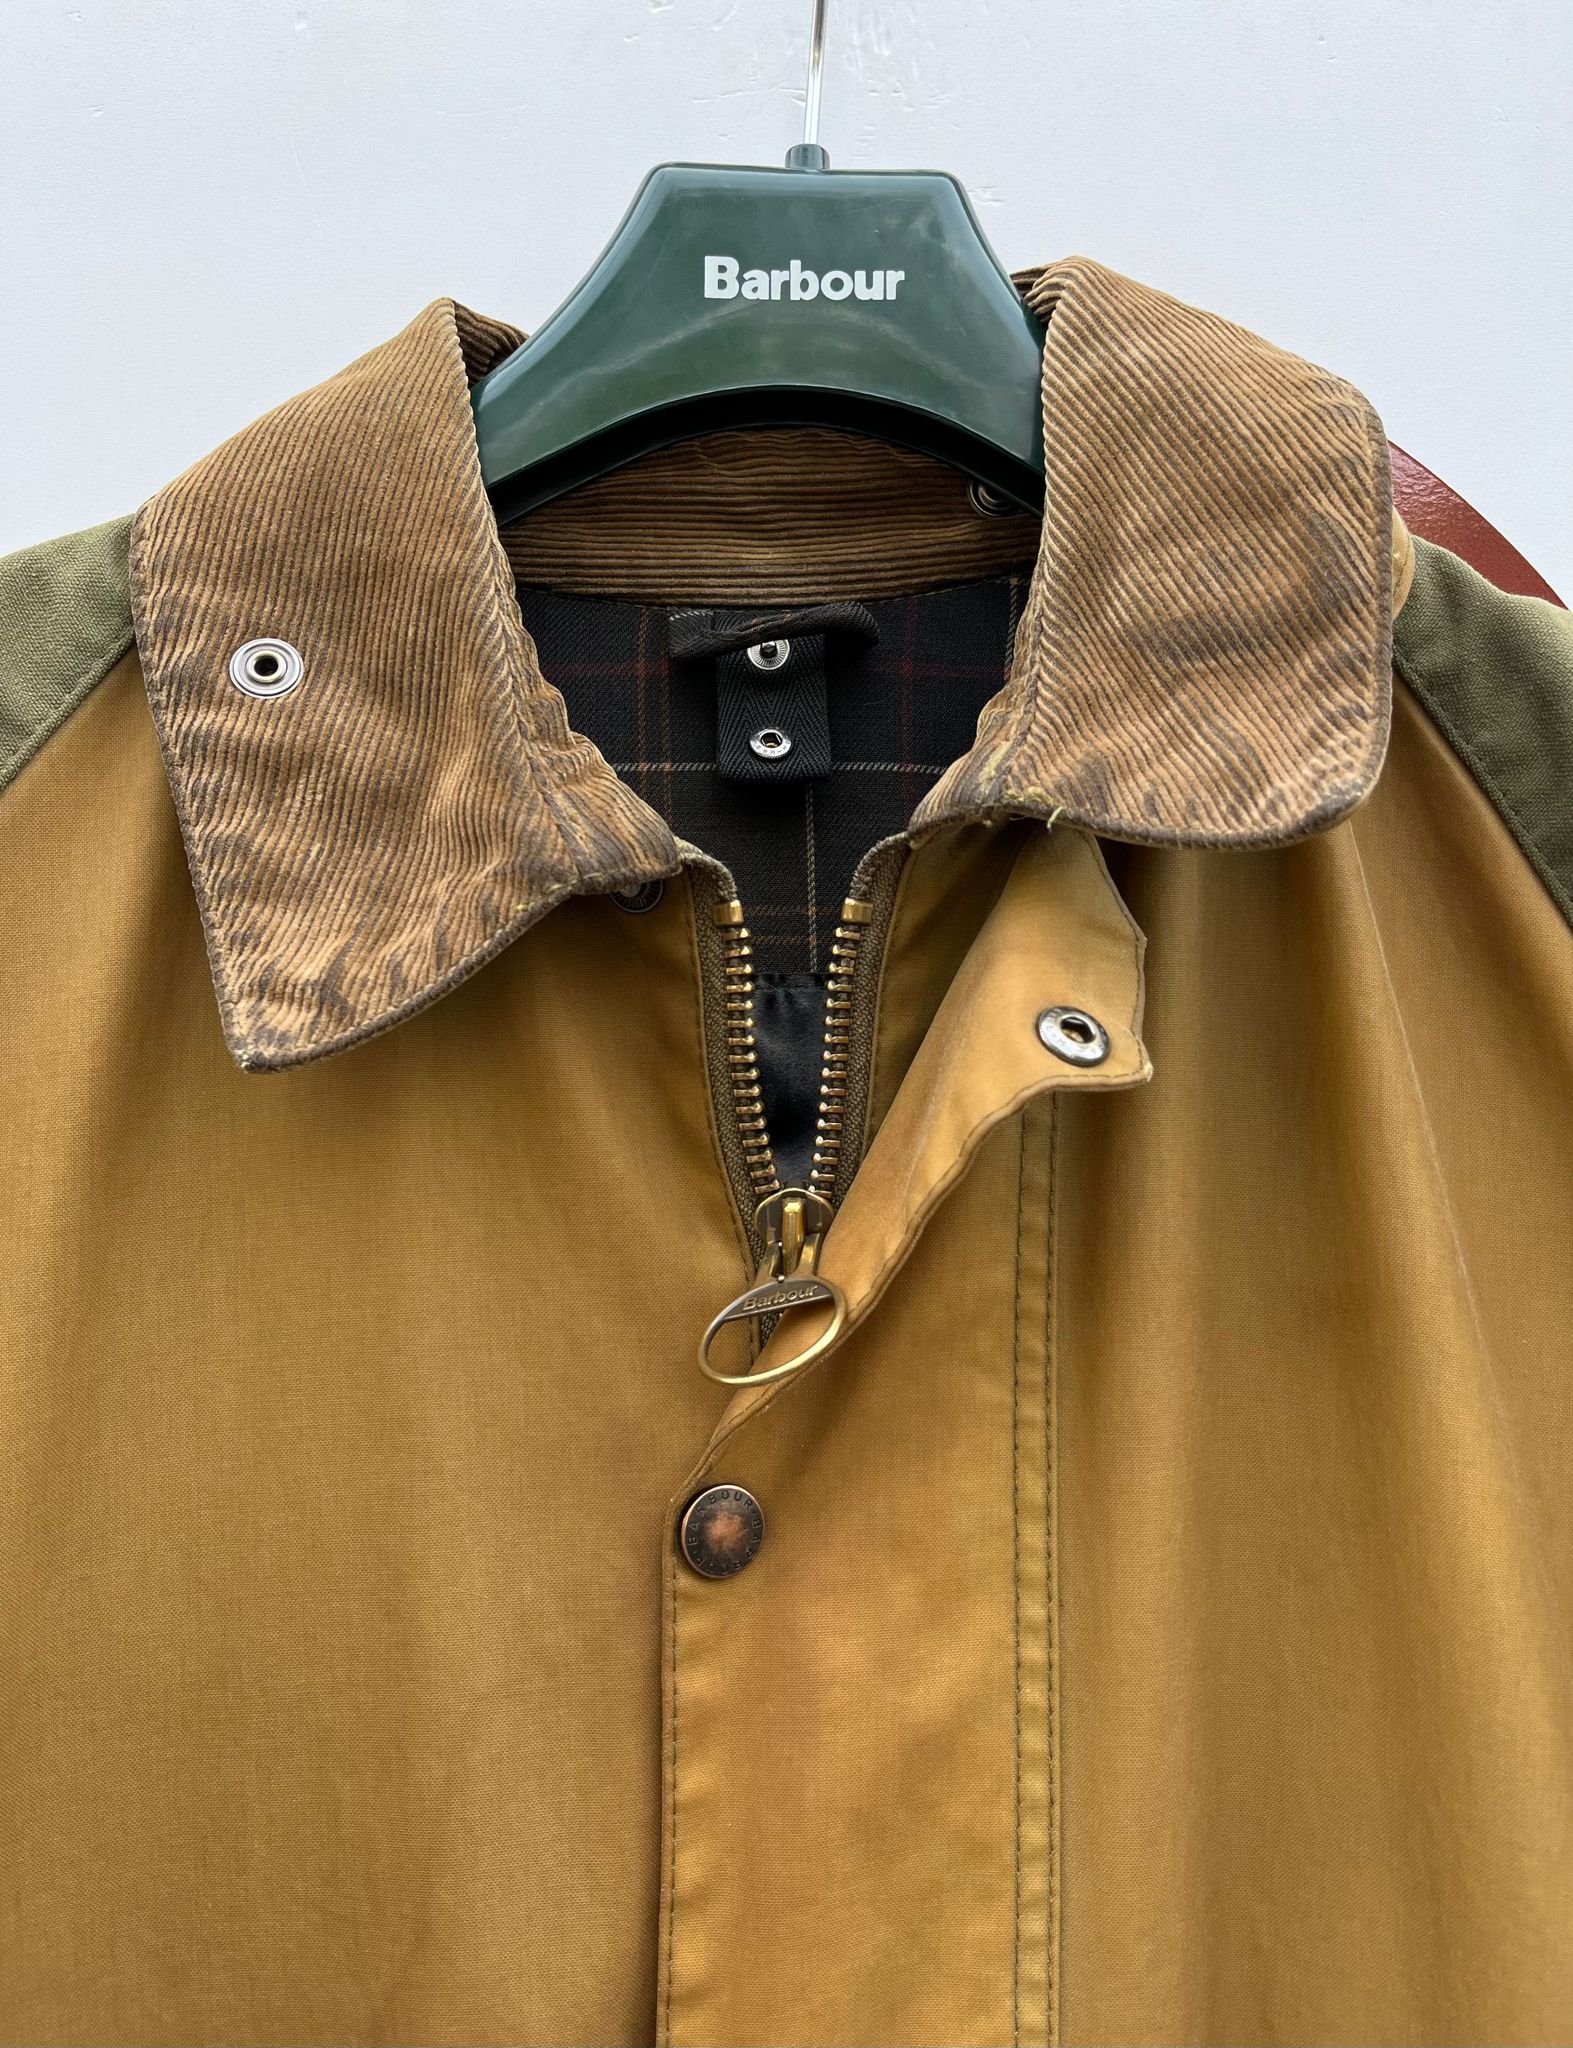 RARA Barbour Beaufort Sporting Jacket Beige c42/107 cm XL Beige